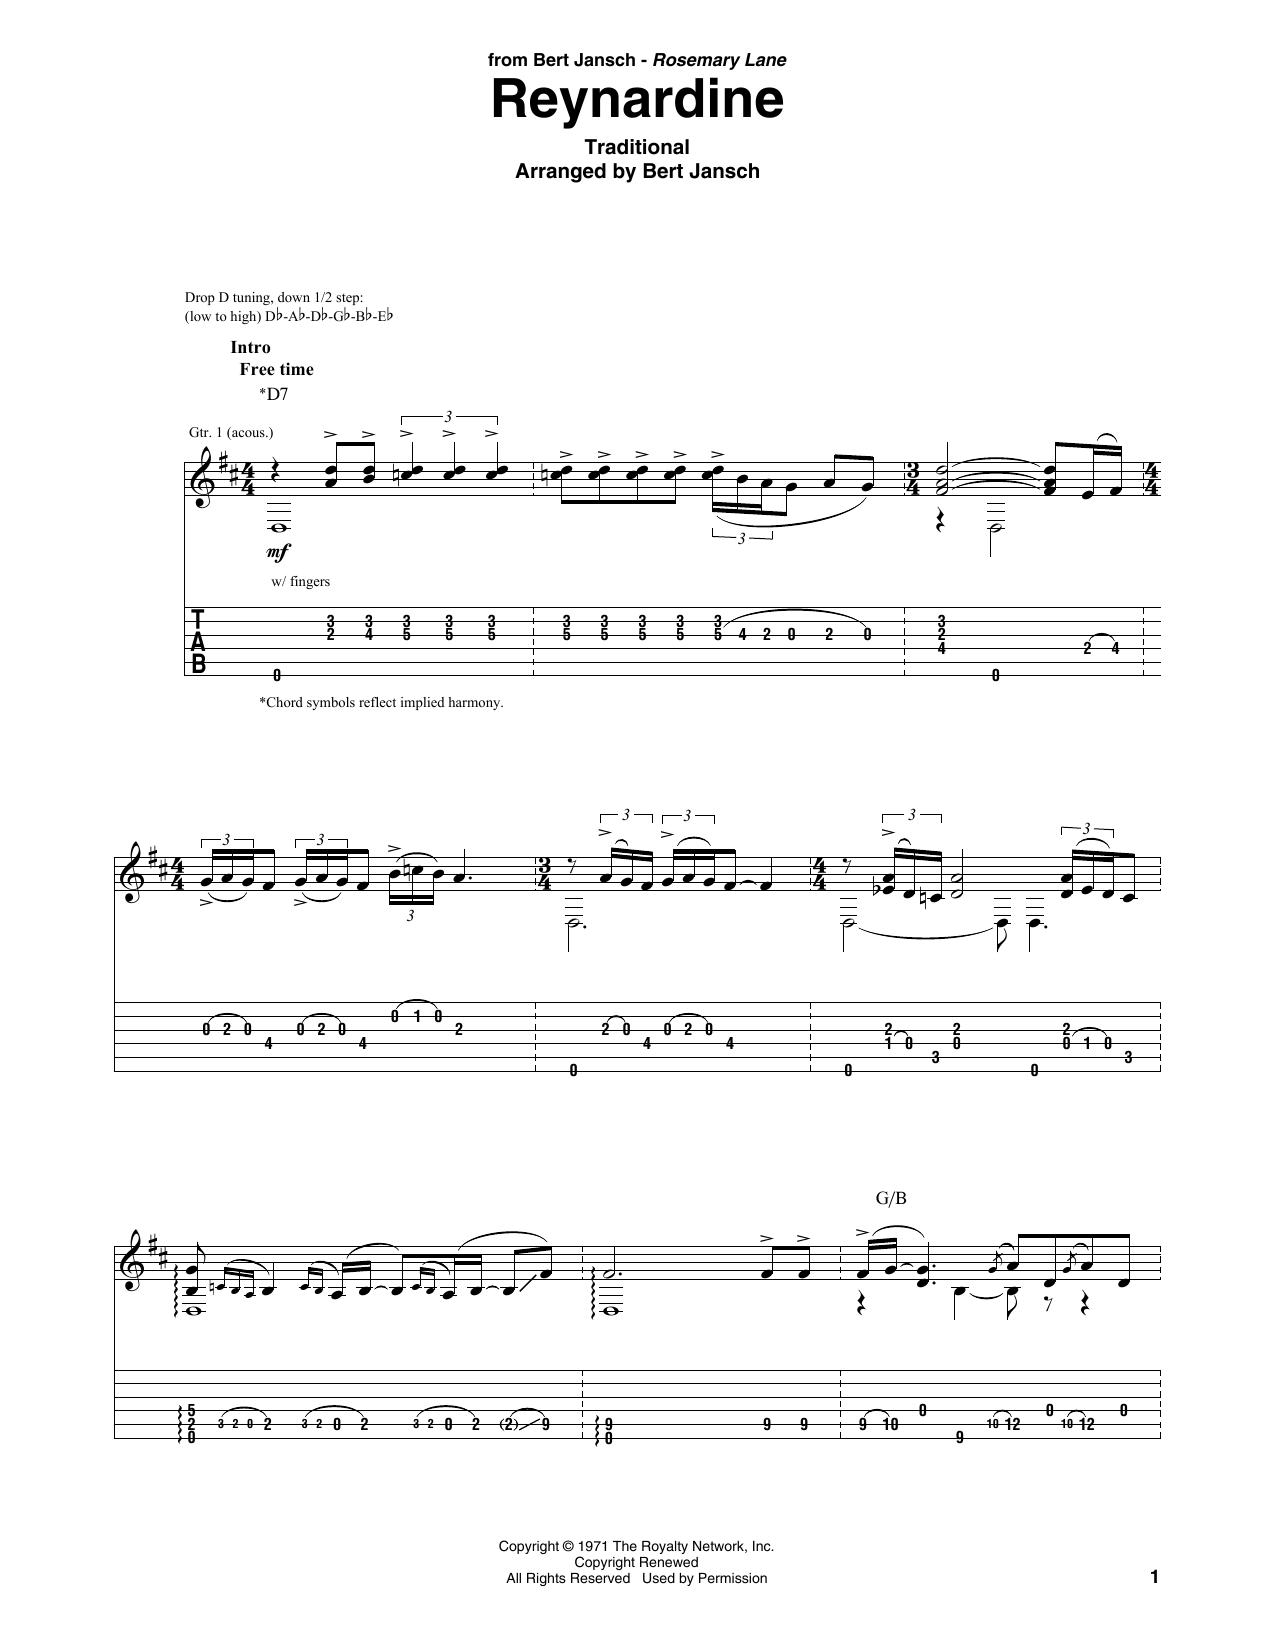 Bert Jansch Reynardine Sheet Music Notes & Chords for Solo Guitar Tab - Download or Print PDF